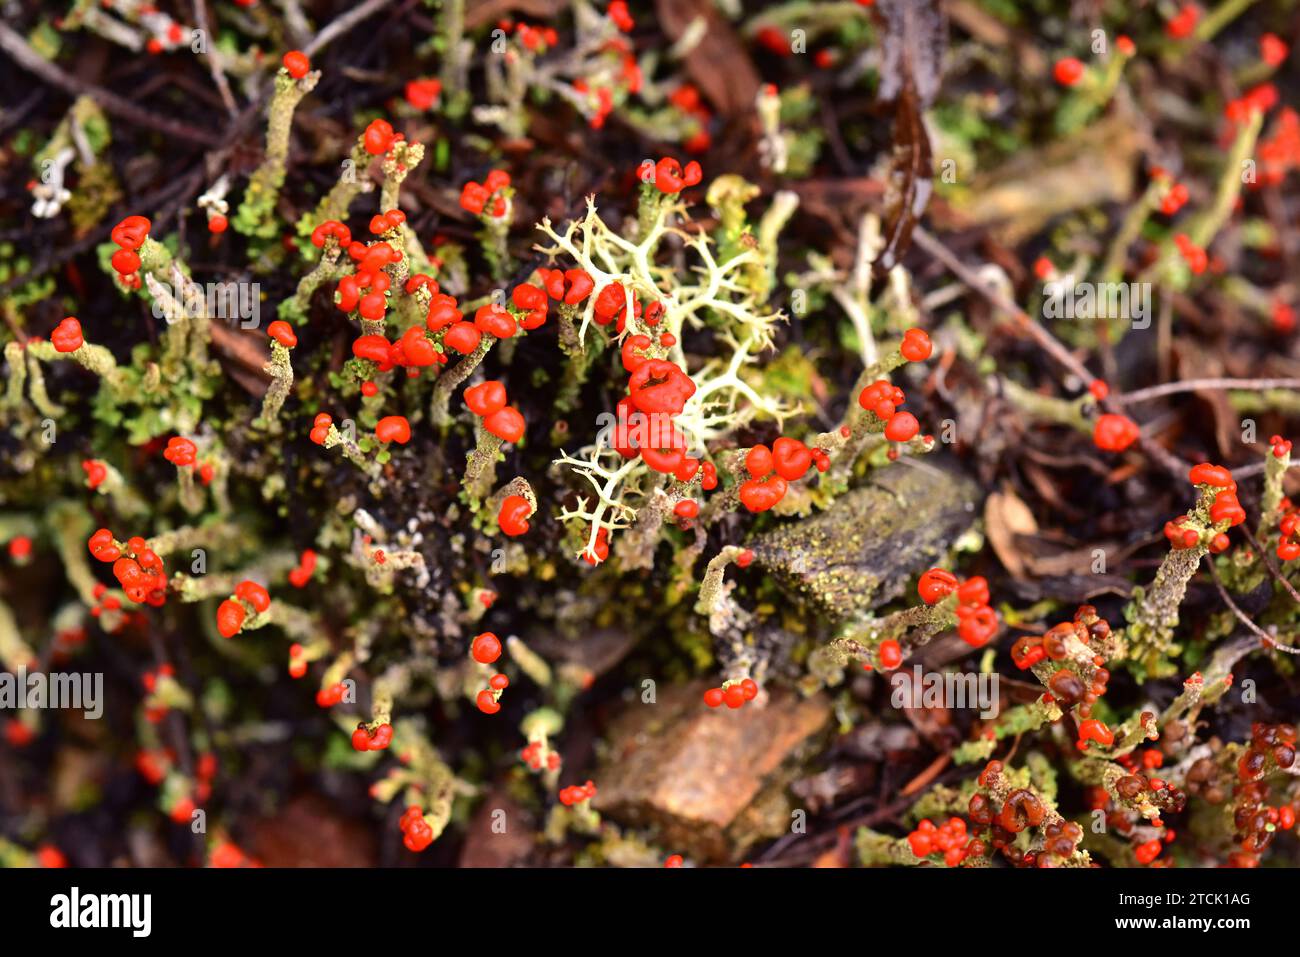 Cladonia macilenta is a squamulose lichen with red apothecia. This photo was taken in Muniellos Biosphere Reserve, Asturias, Spain. Stock Photo